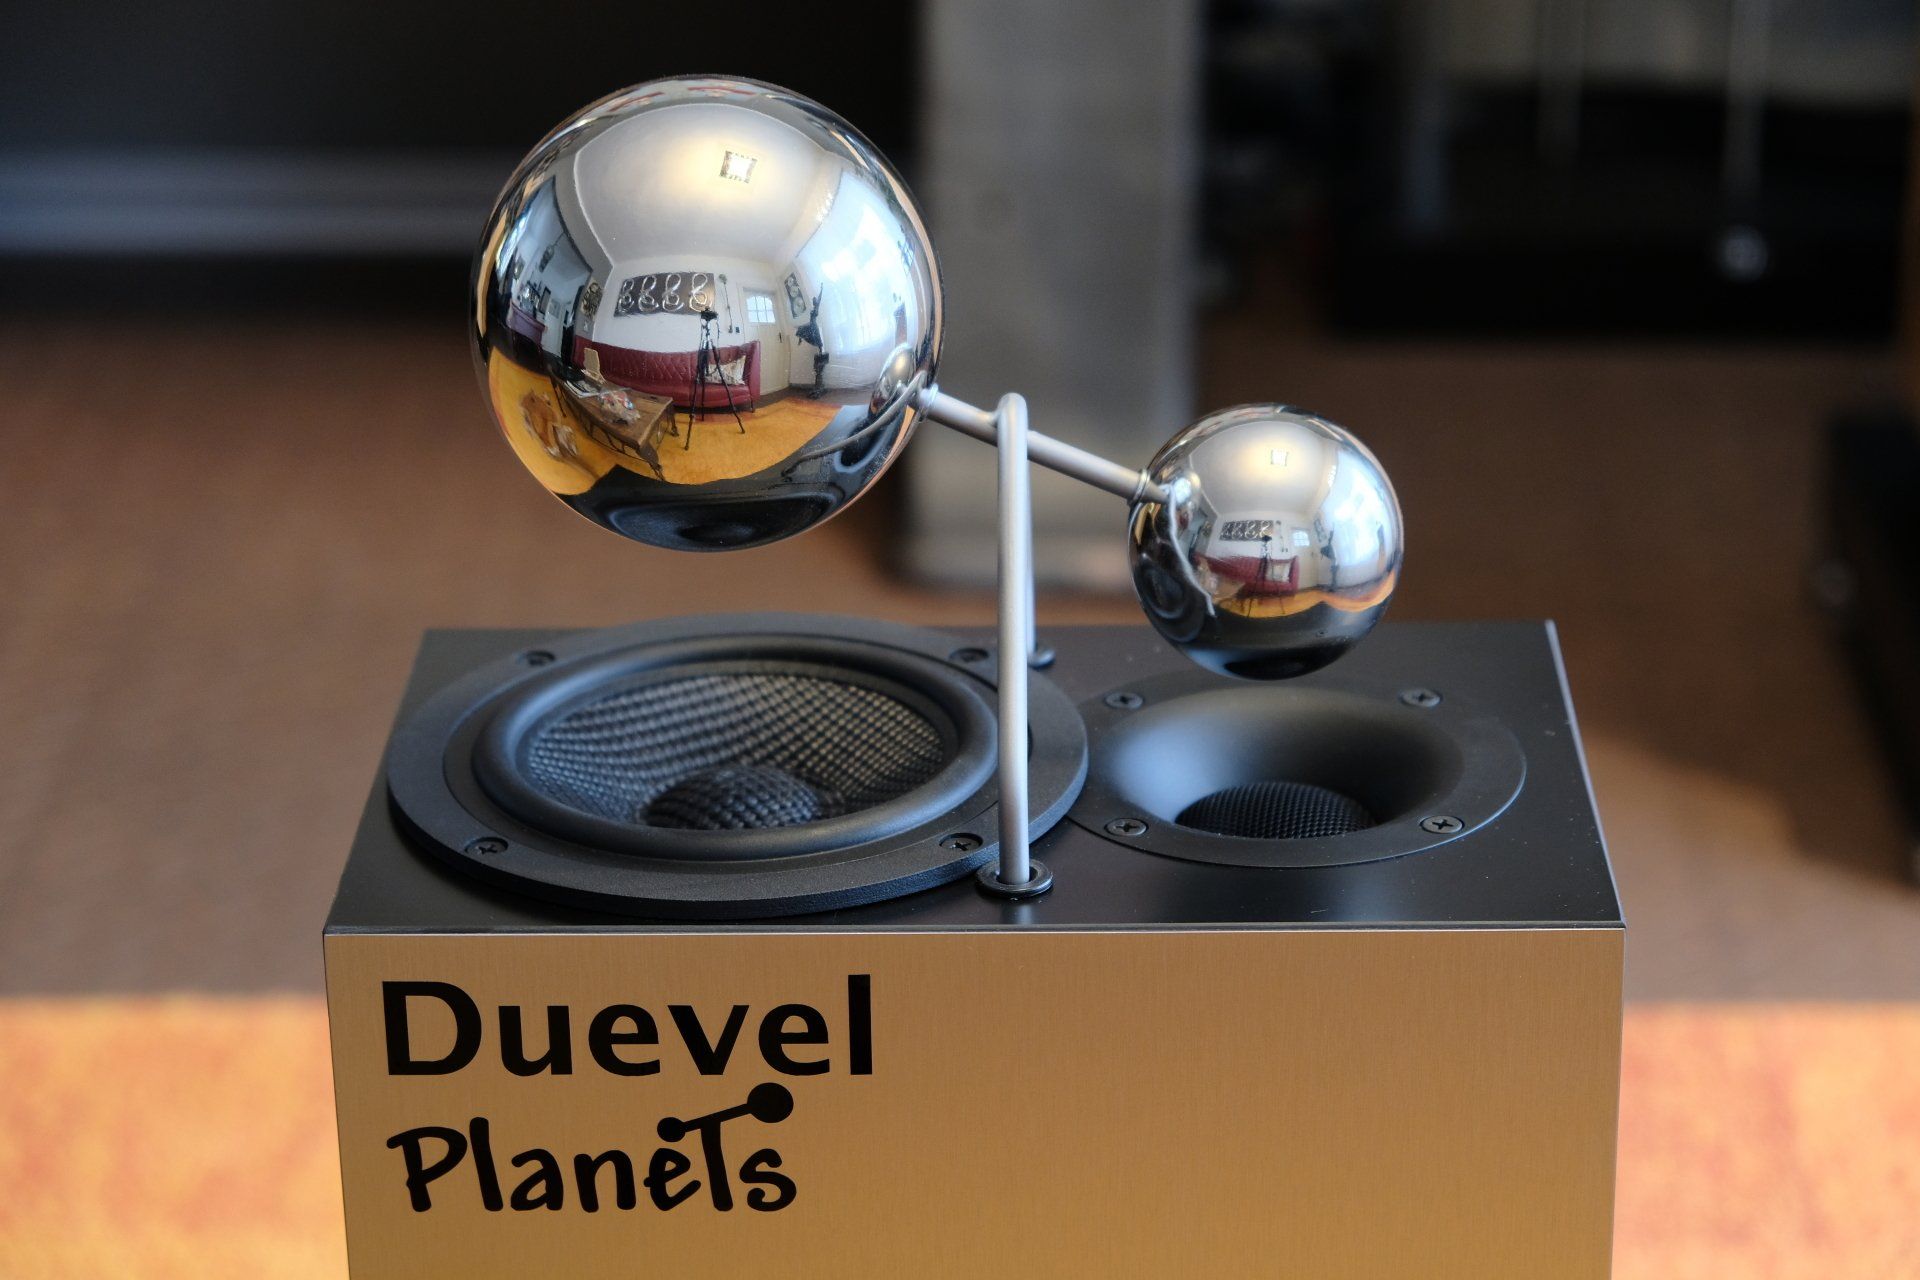 omnidirectional 360° speaker - Planets